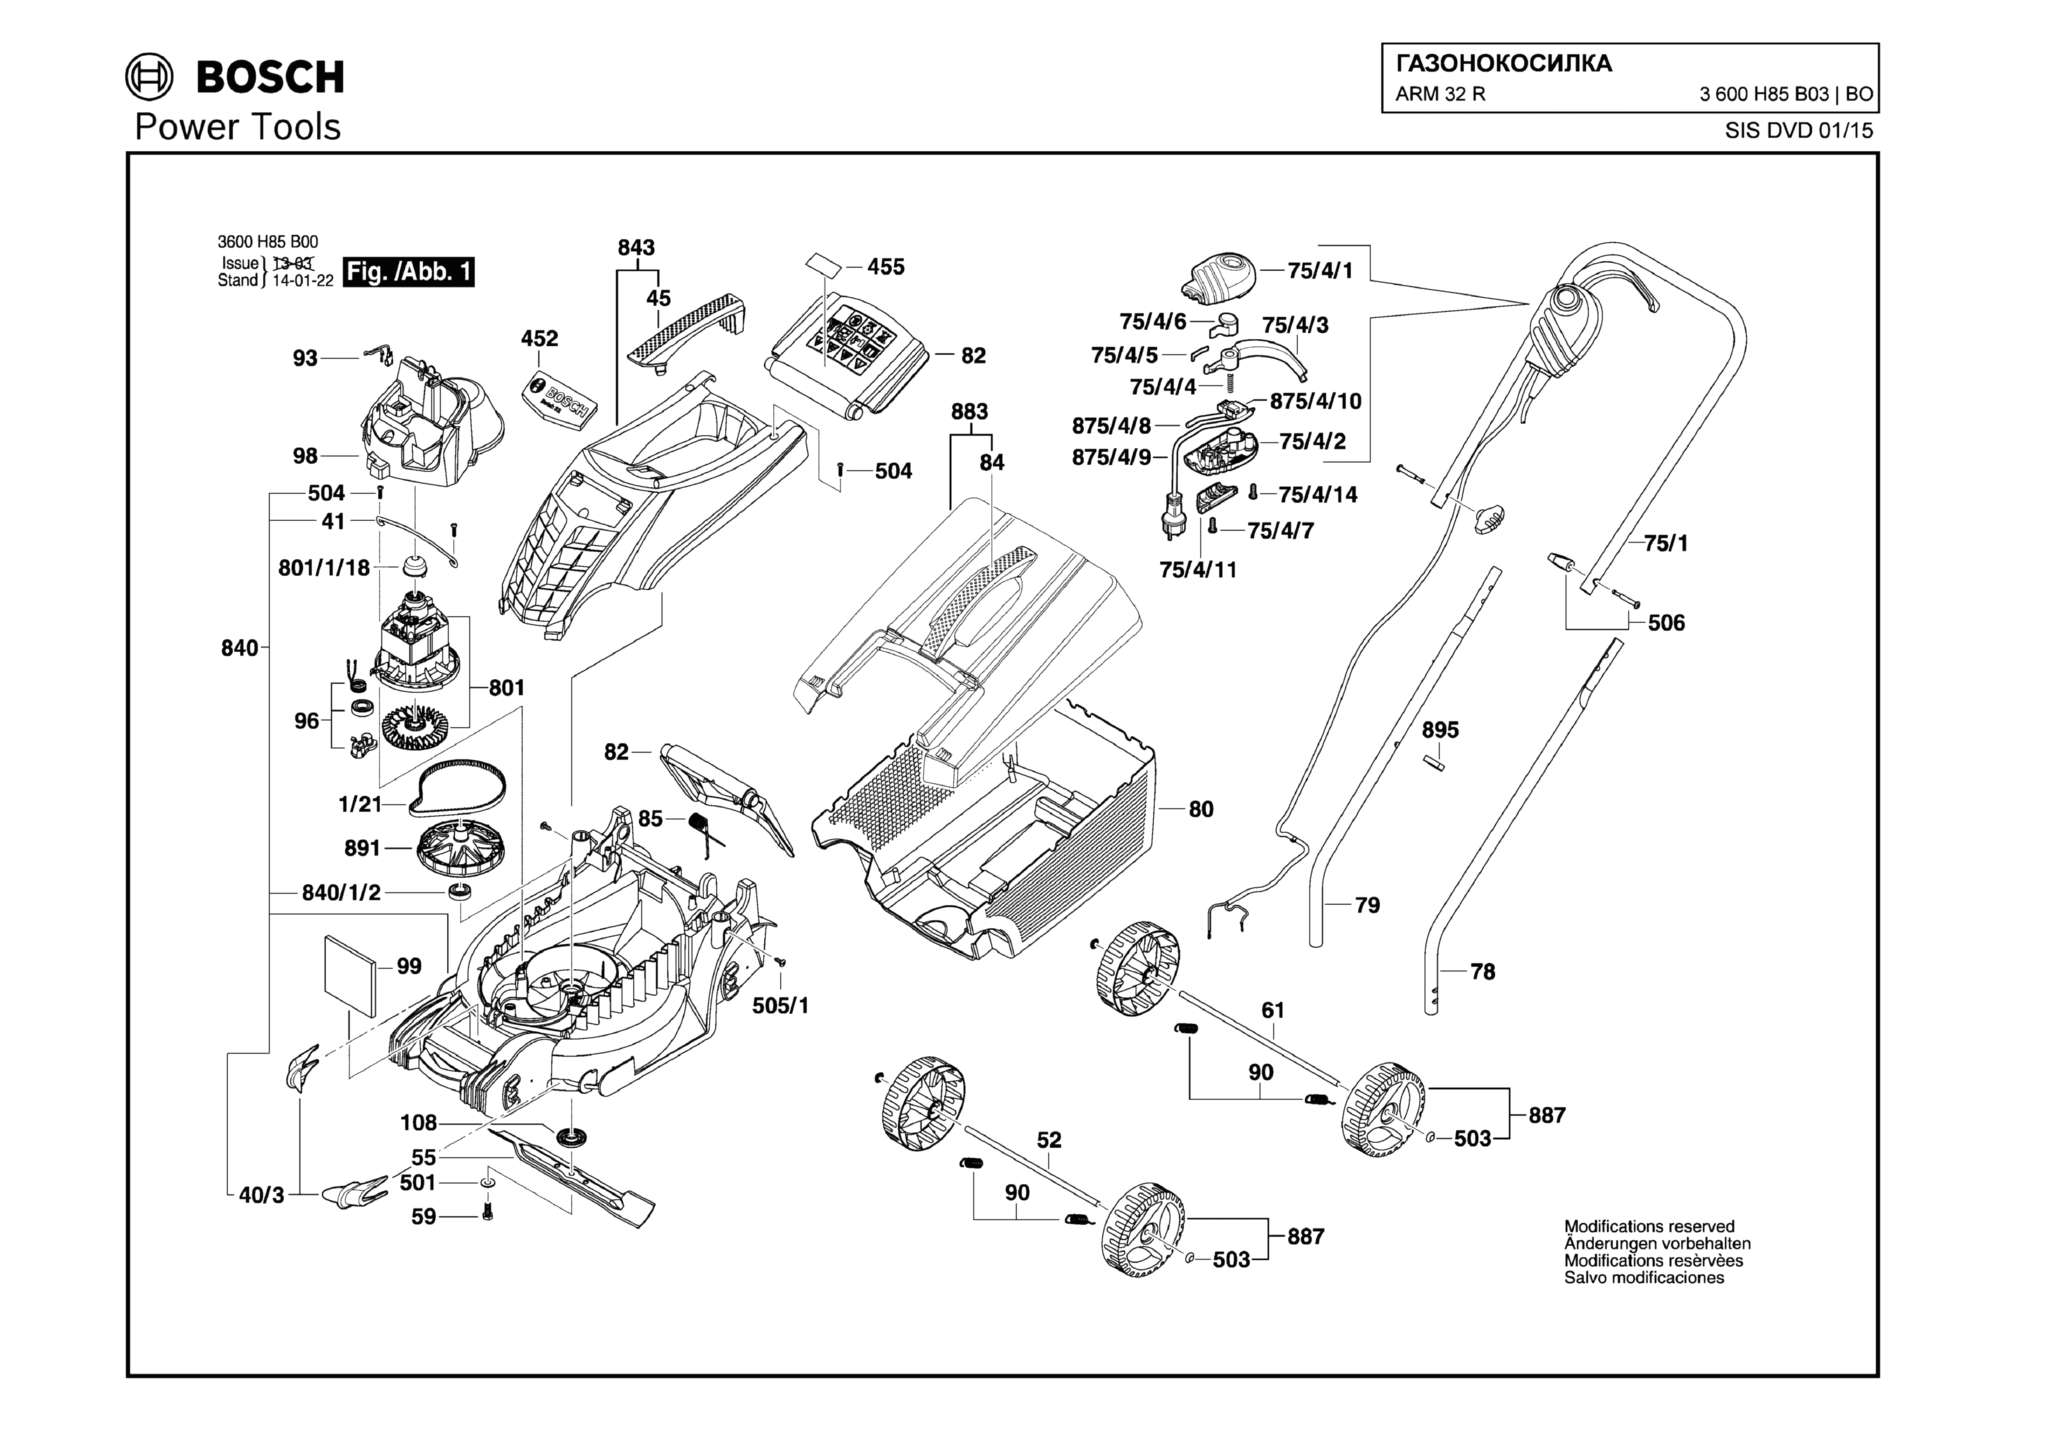 Запчасти, схема и деталировка Bosch ARM 32 R (ТИП 3600H85B03)